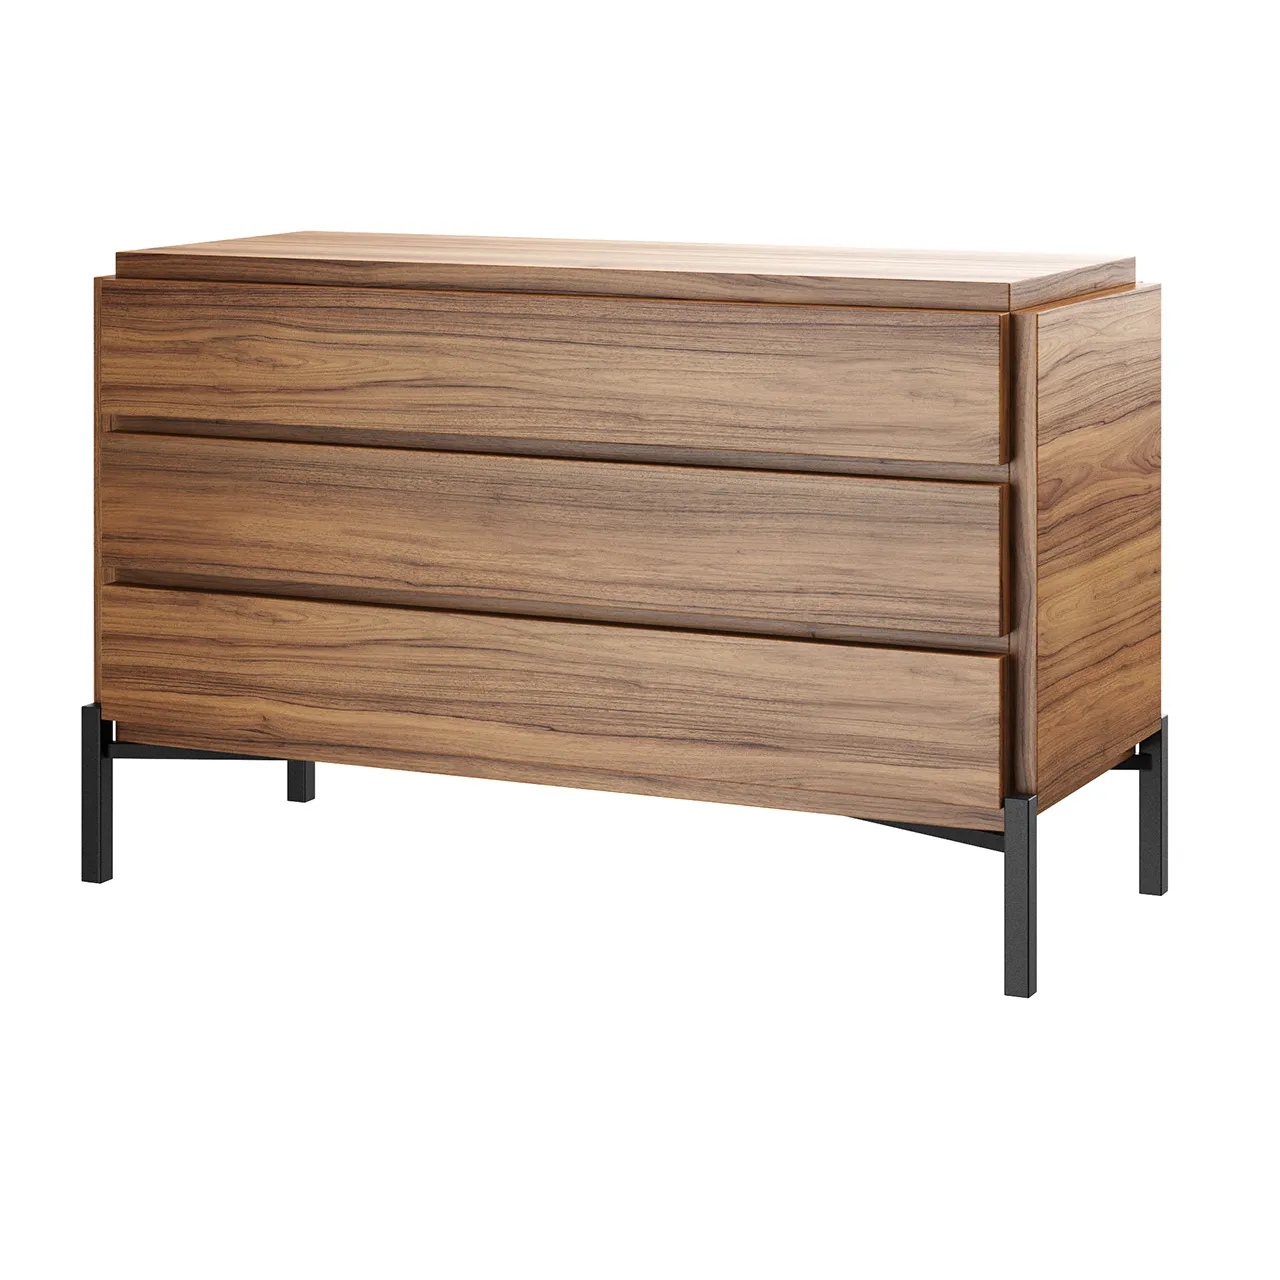 Furniture – groove-drawer-chest-storage-unit-by-bonaldo